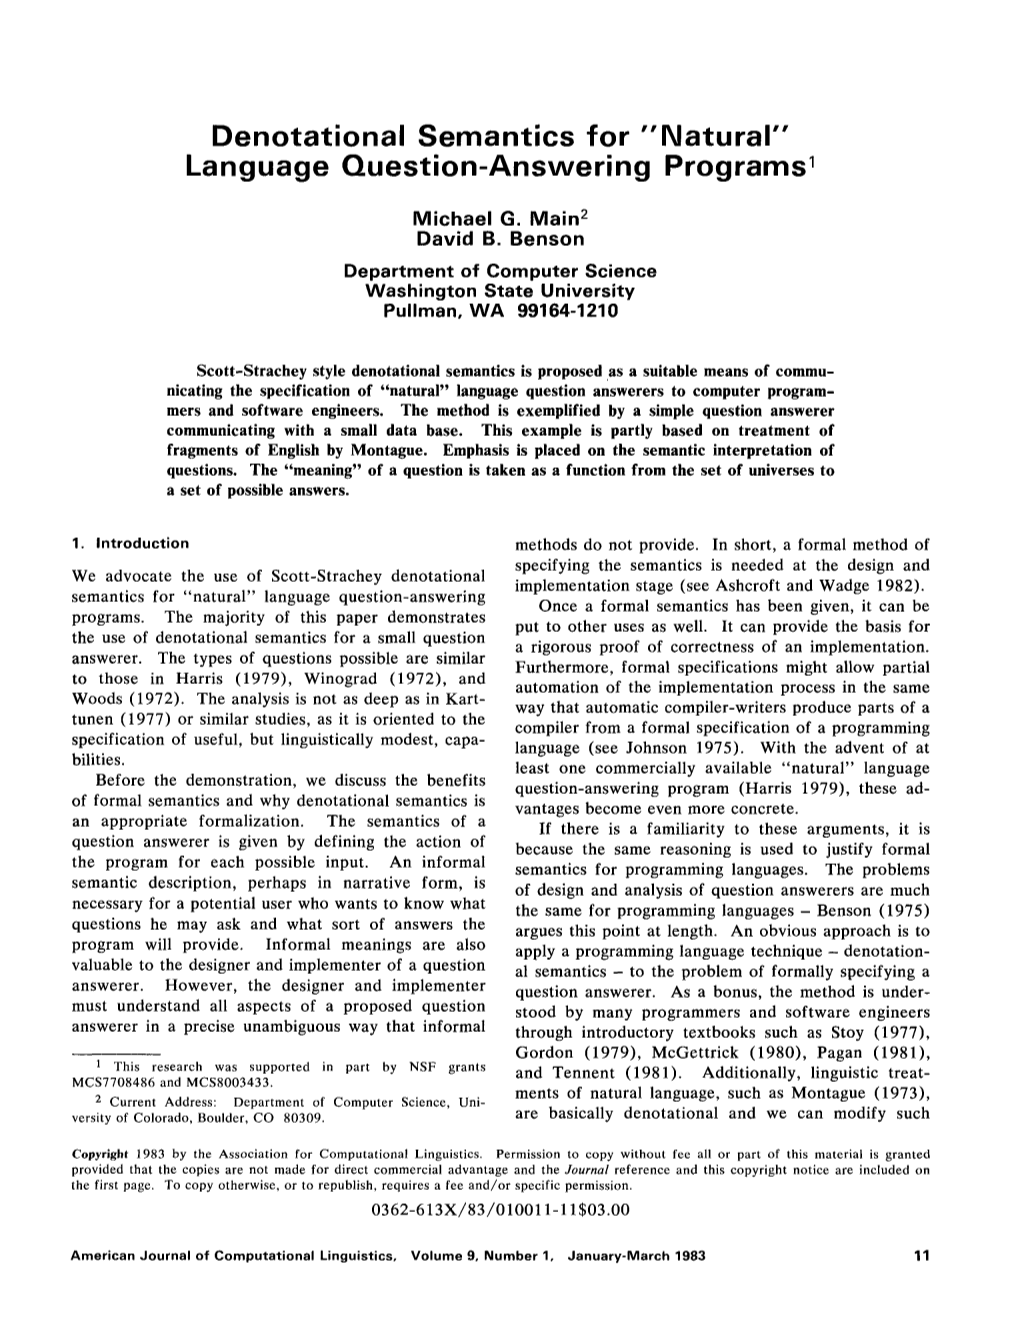 Denotational Semantics for 'Natural' Language Question-Answering